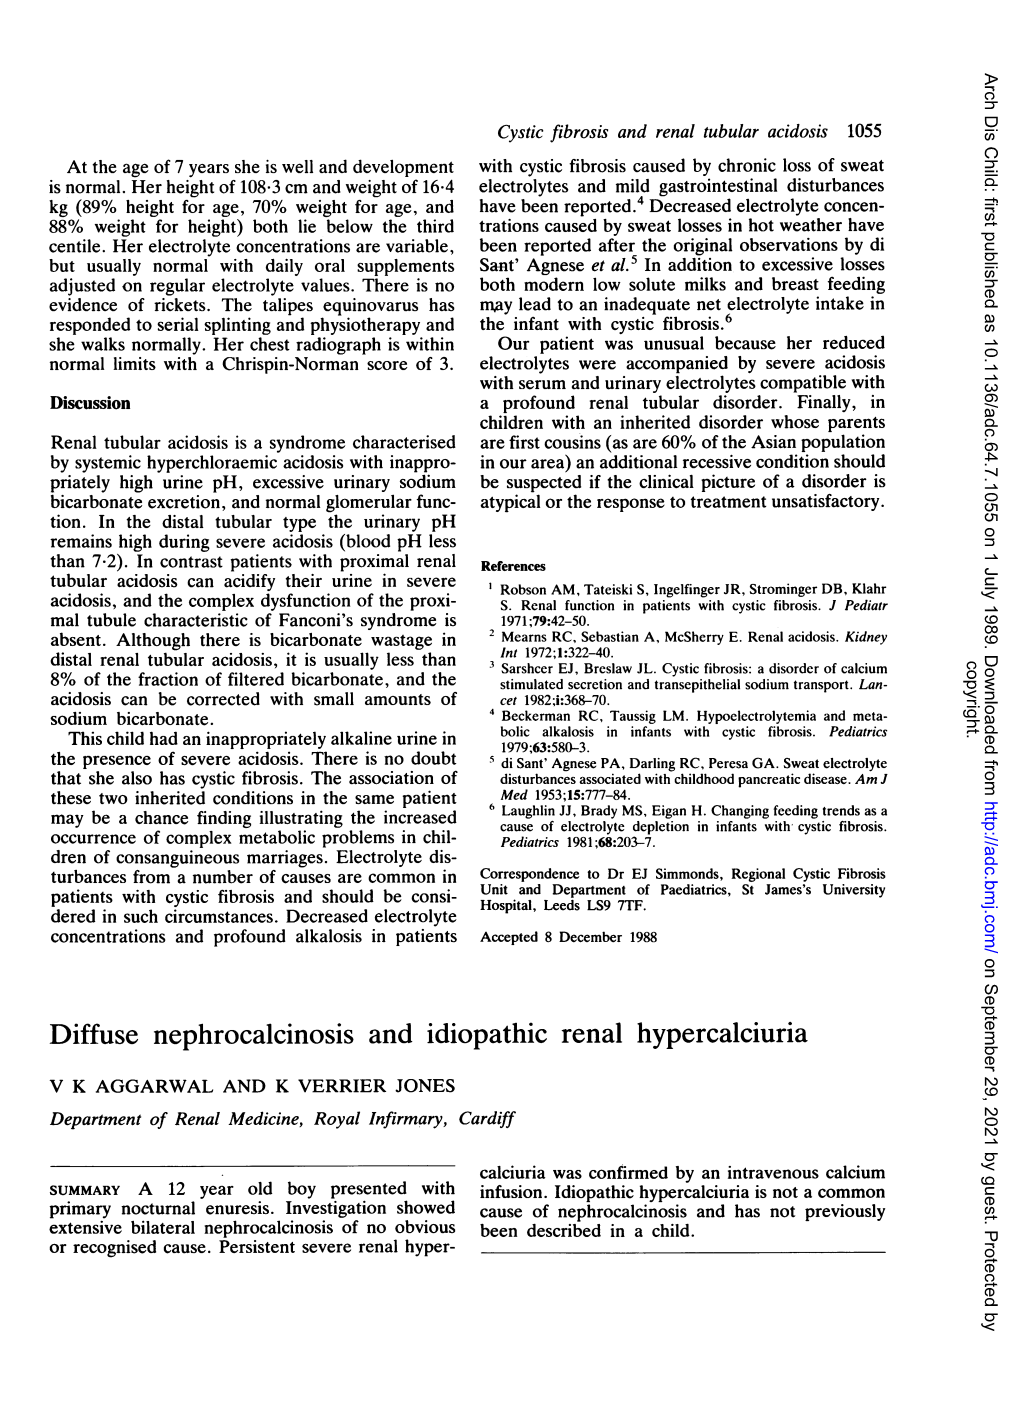 Diffuse Nephrocalcinosis and Idiopathic Renal Hypercalciuria